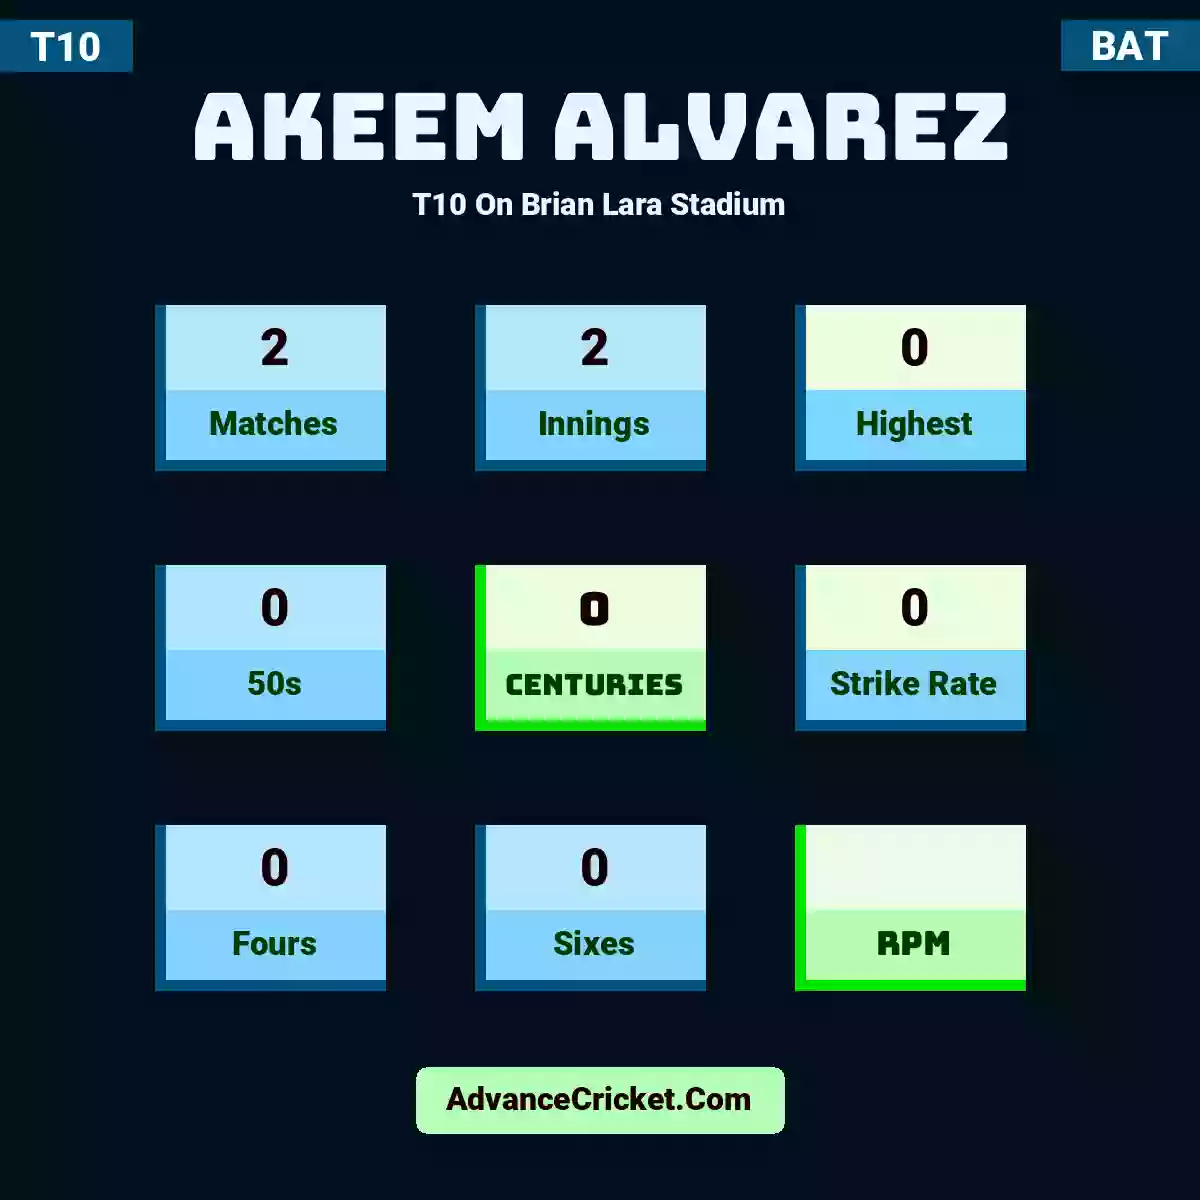 Akeem Alvarez T10  On Brian Lara Stadium, Akeem Alvarez played 2 matches, scored 0 runs as highest, 0 half-centuries, and 0 centuries, with a strike rate of 0. A.Alvarez hit 0 fours and 0 sixes.